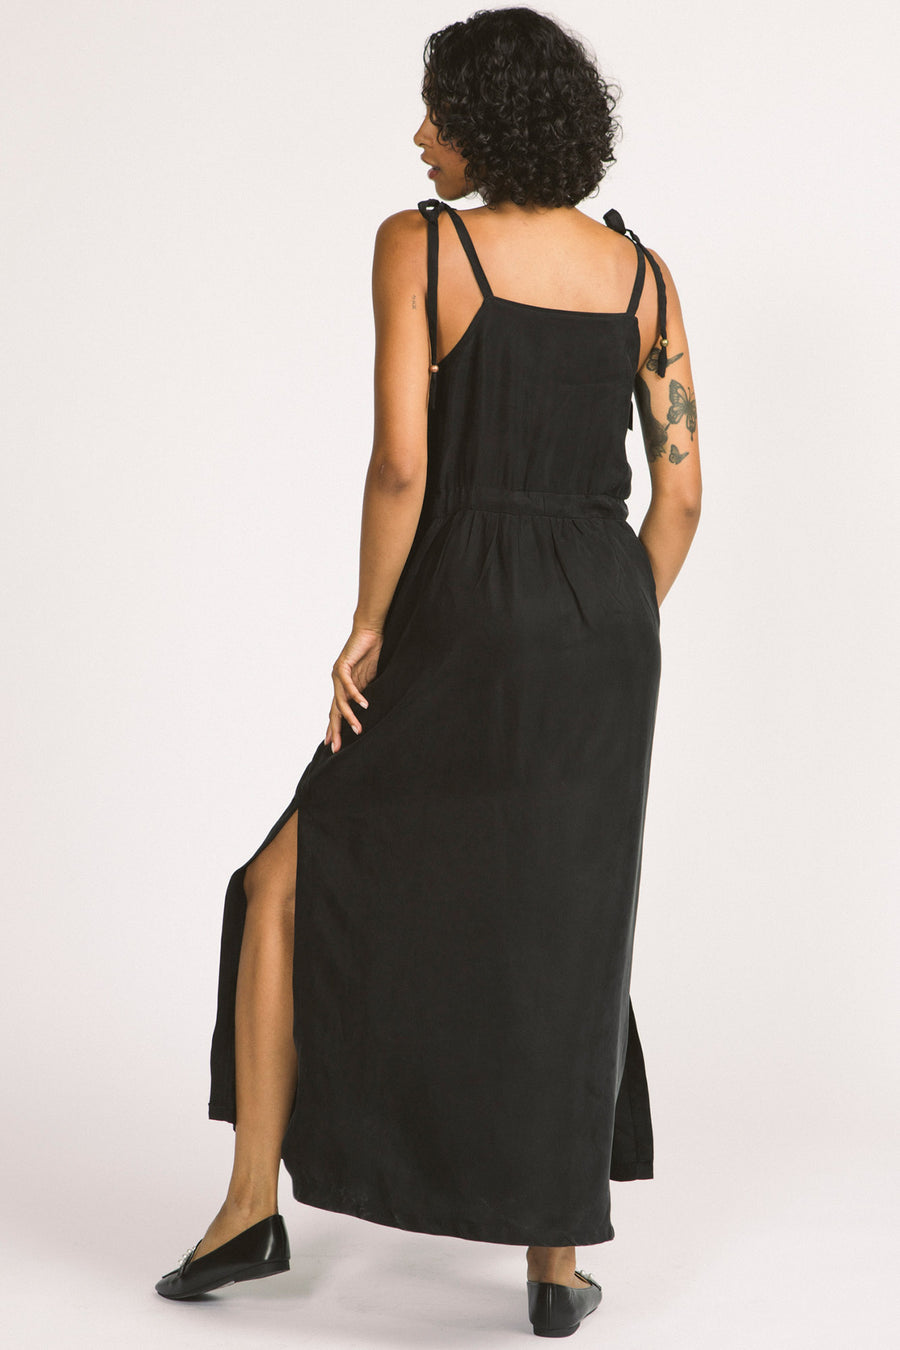 Back view of woman wearing black Novalie dress by Allison Wonderland with adjustable shoulder straps and waist. 